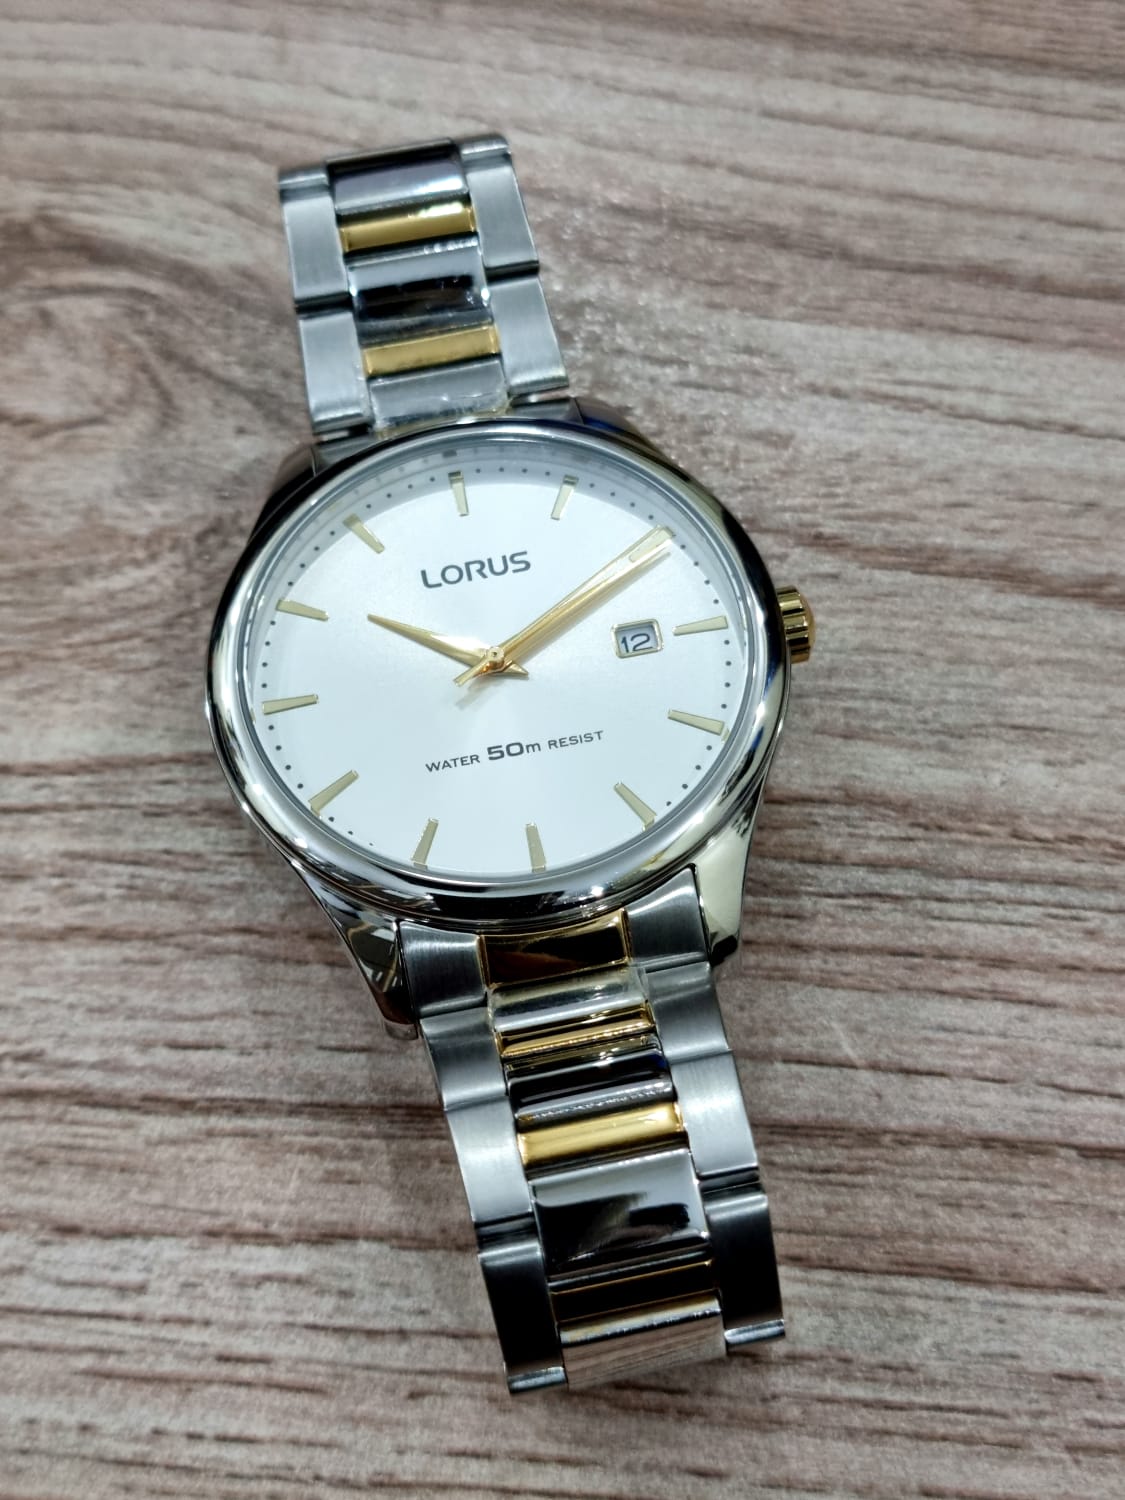 Lorus Sub Brand Of Seiko Gents 41mm Watch